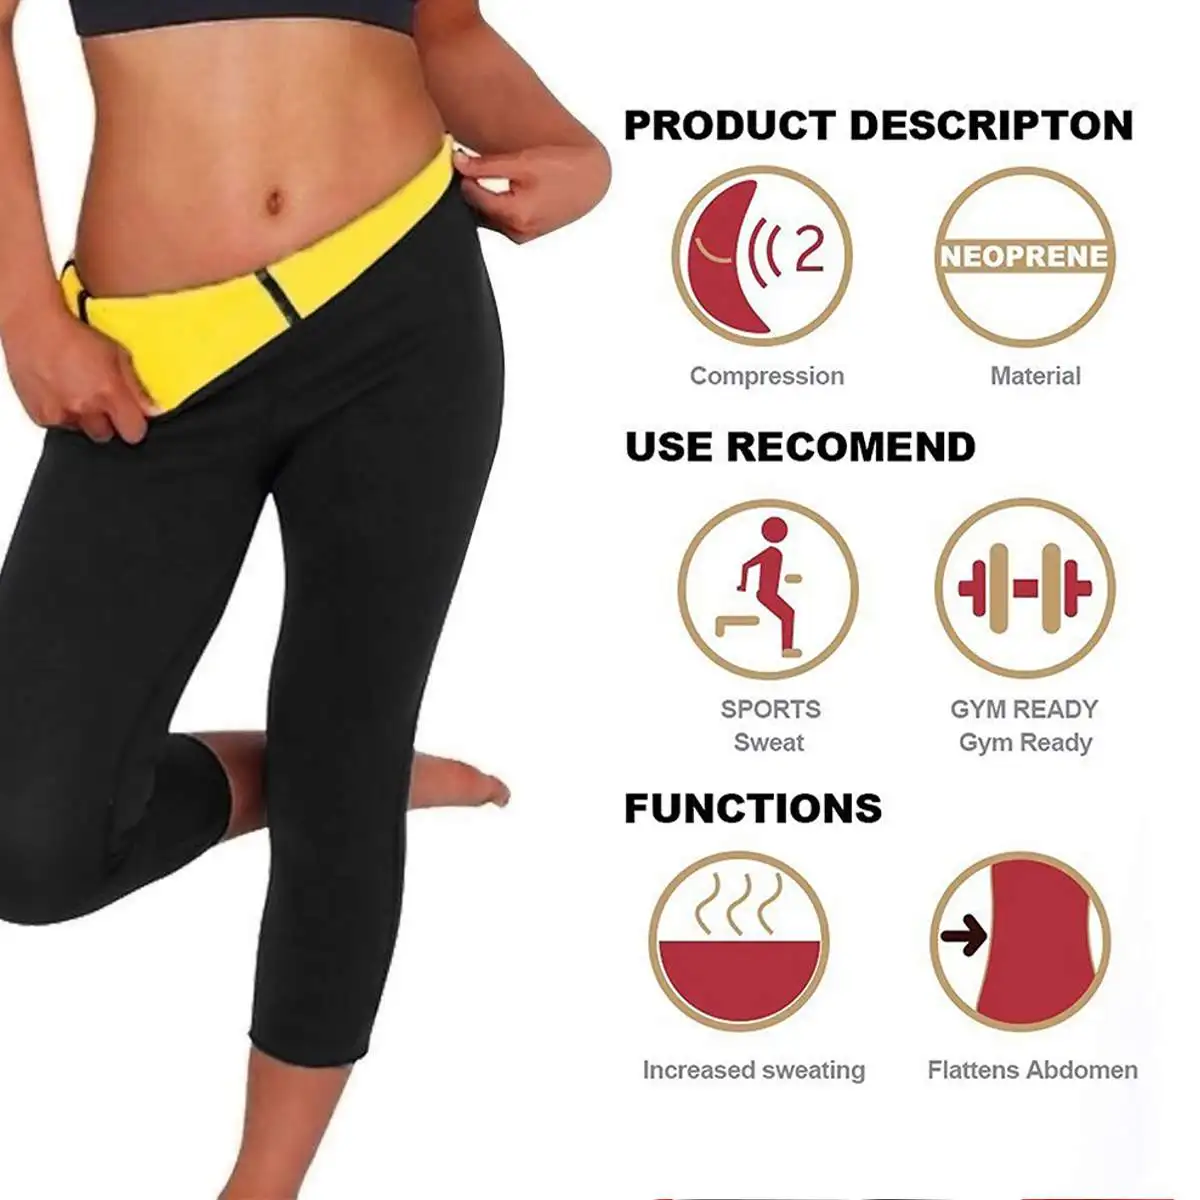 Thermo Sweat Hot Neoprene Body Shaper Pants Slimming Waist Trainer Yoga 